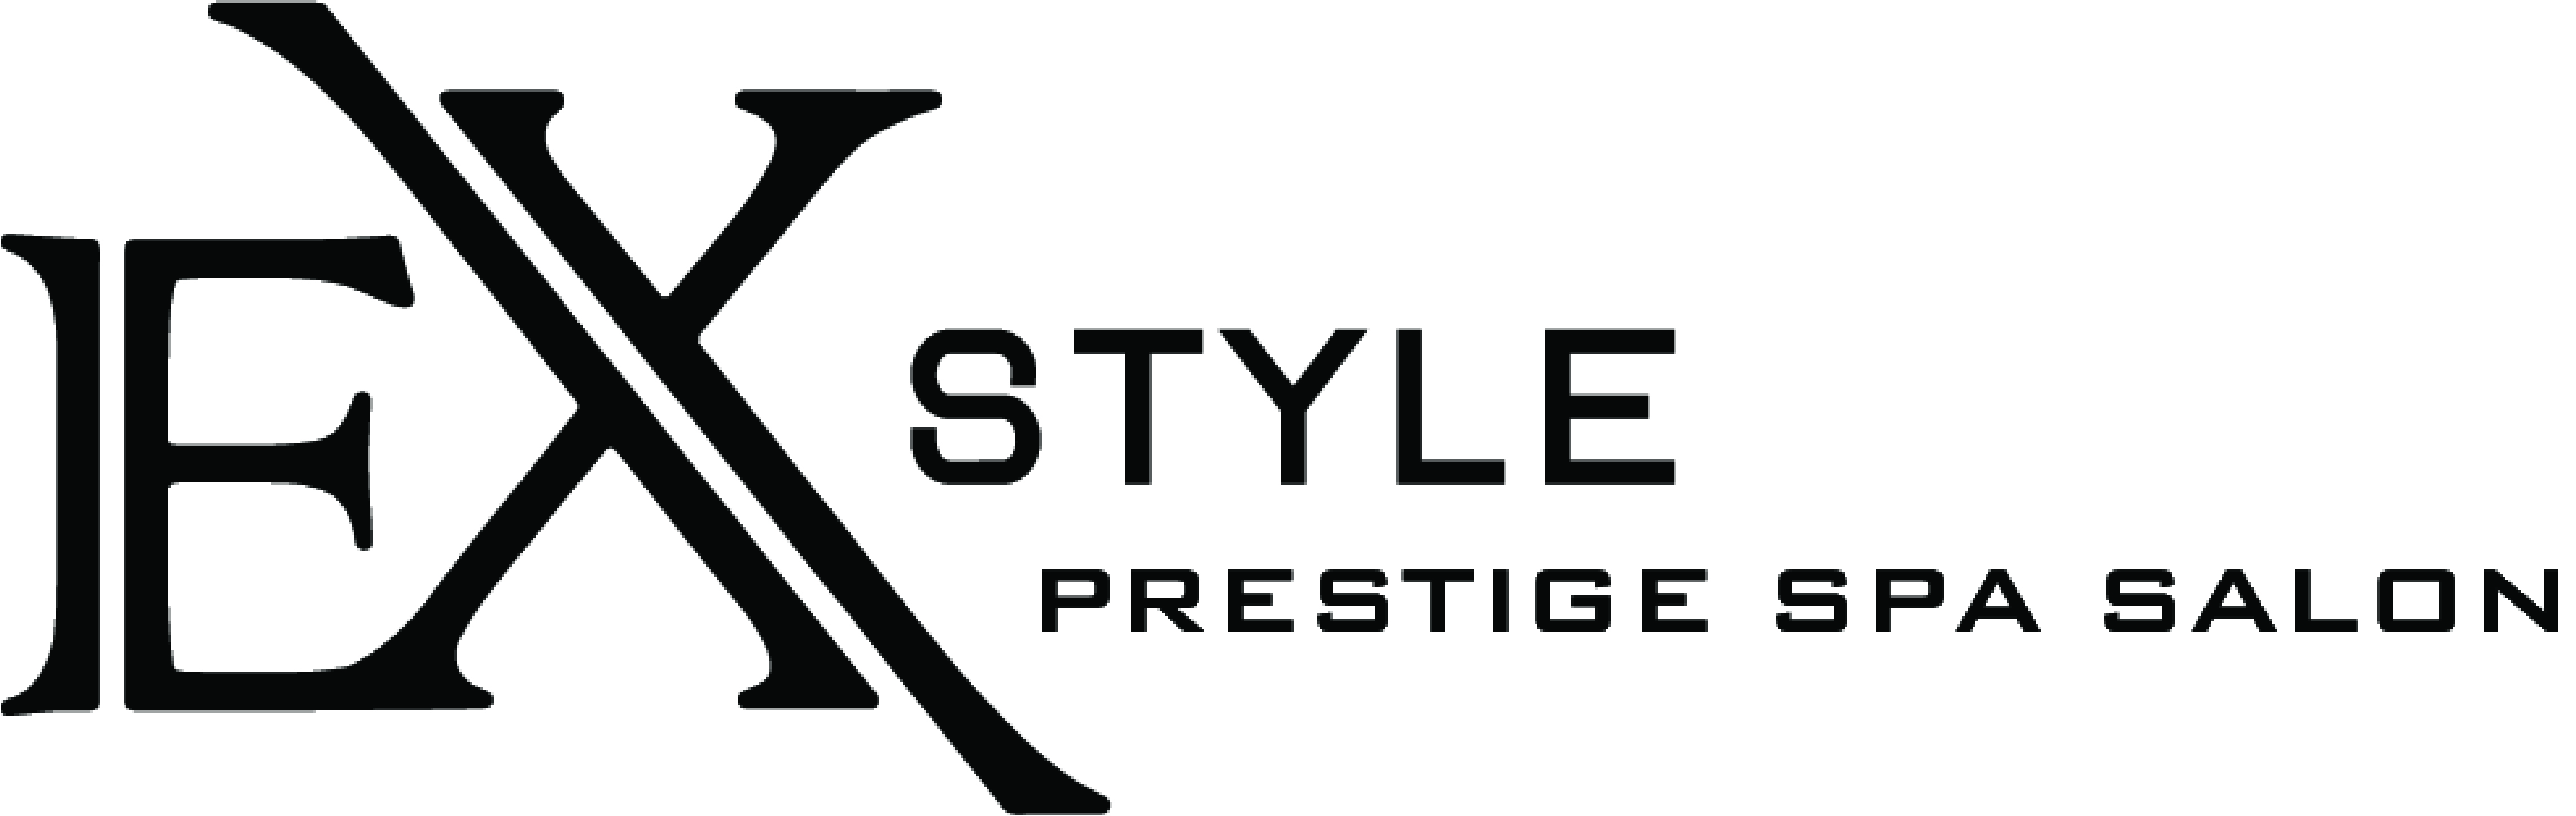 EX Style Prestige Spa Salon.jpg